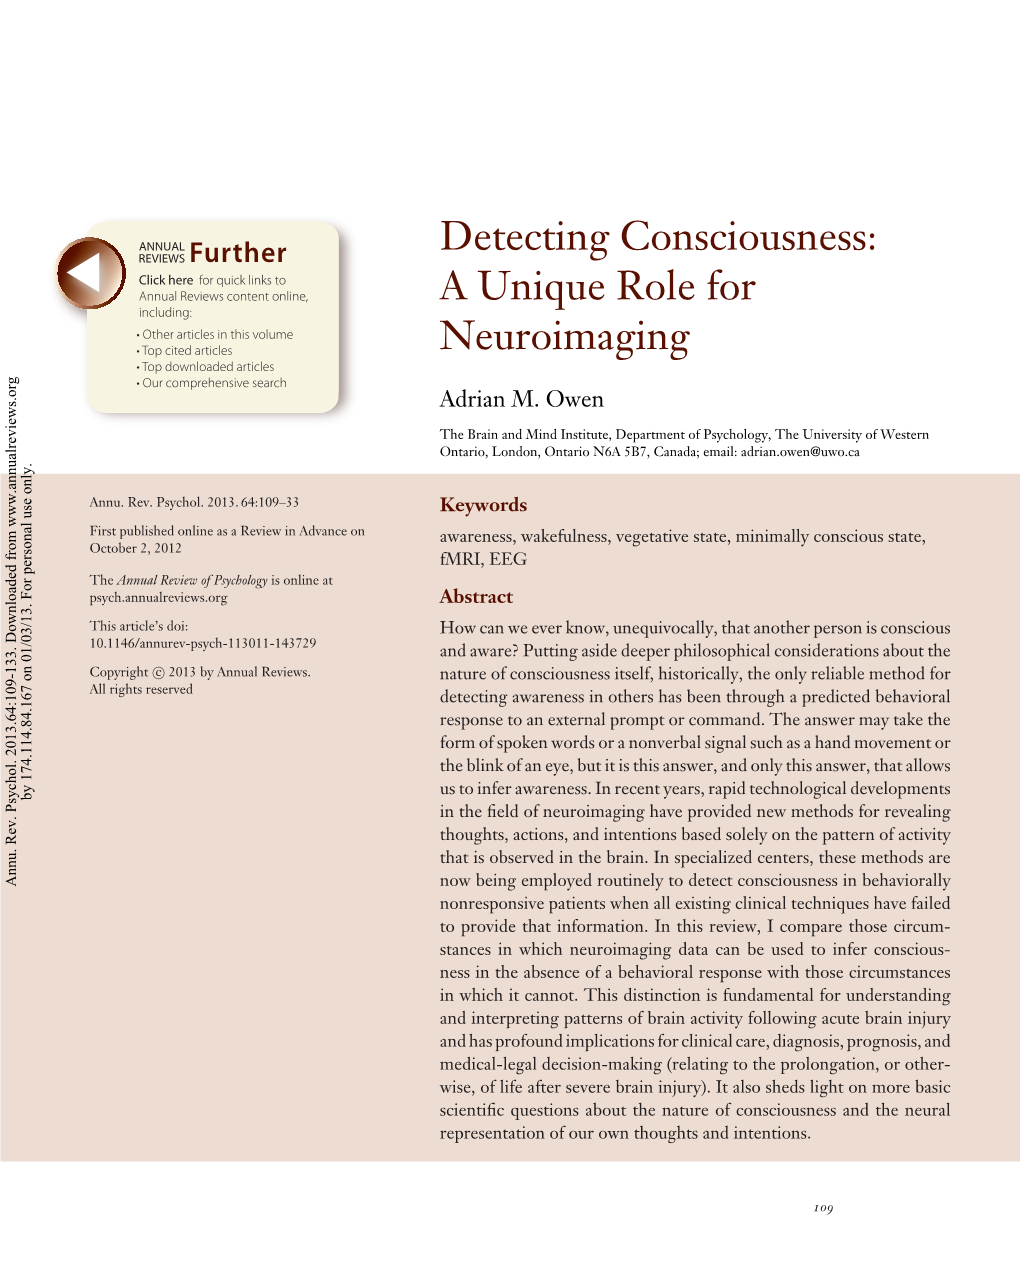 Detecting Consciousness: a Unique Role for Neuroimaging